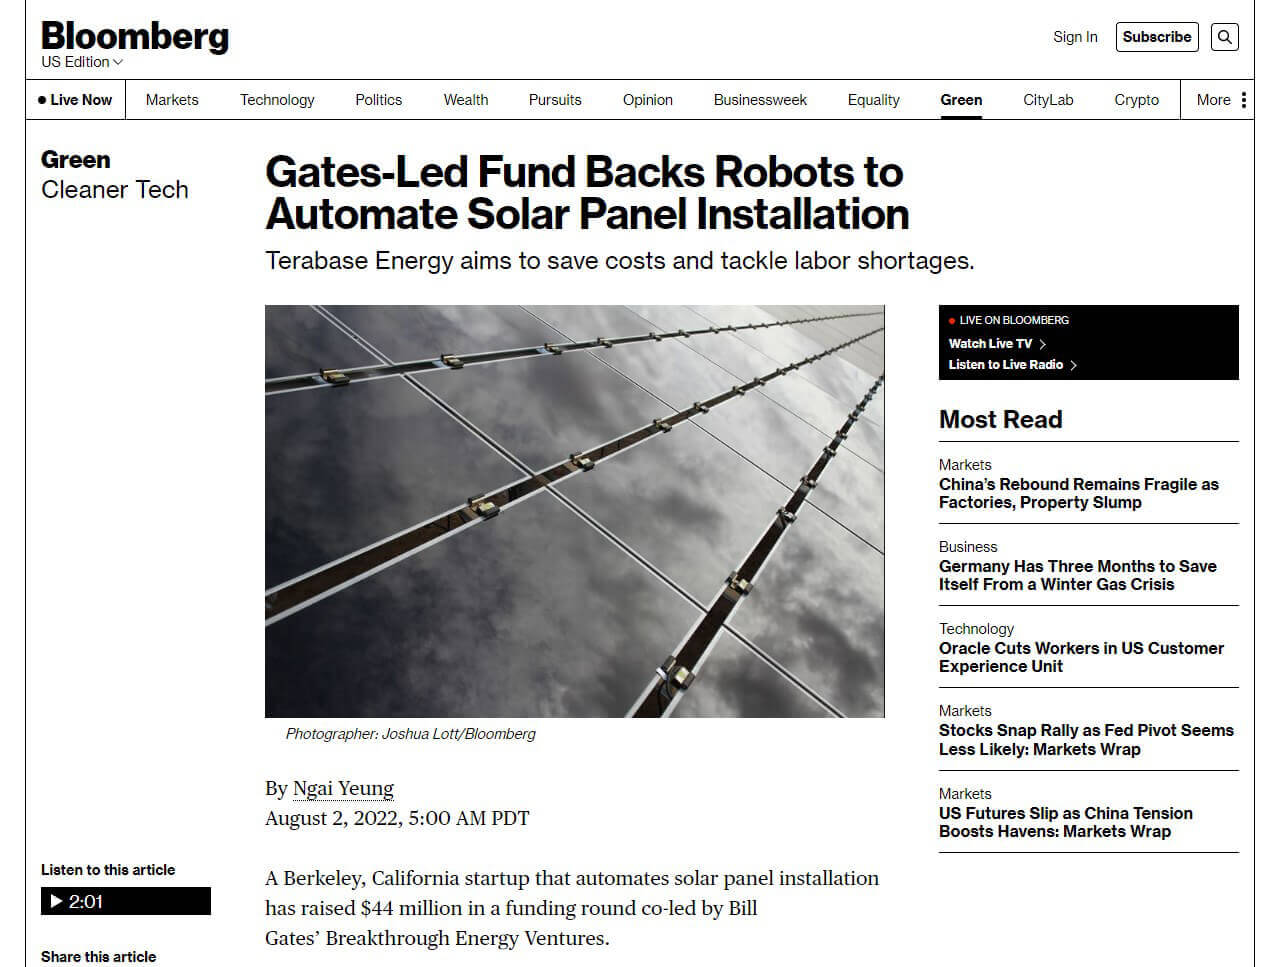 Gates-Led Fund Backs Robots to Automate Solar Panel Installation